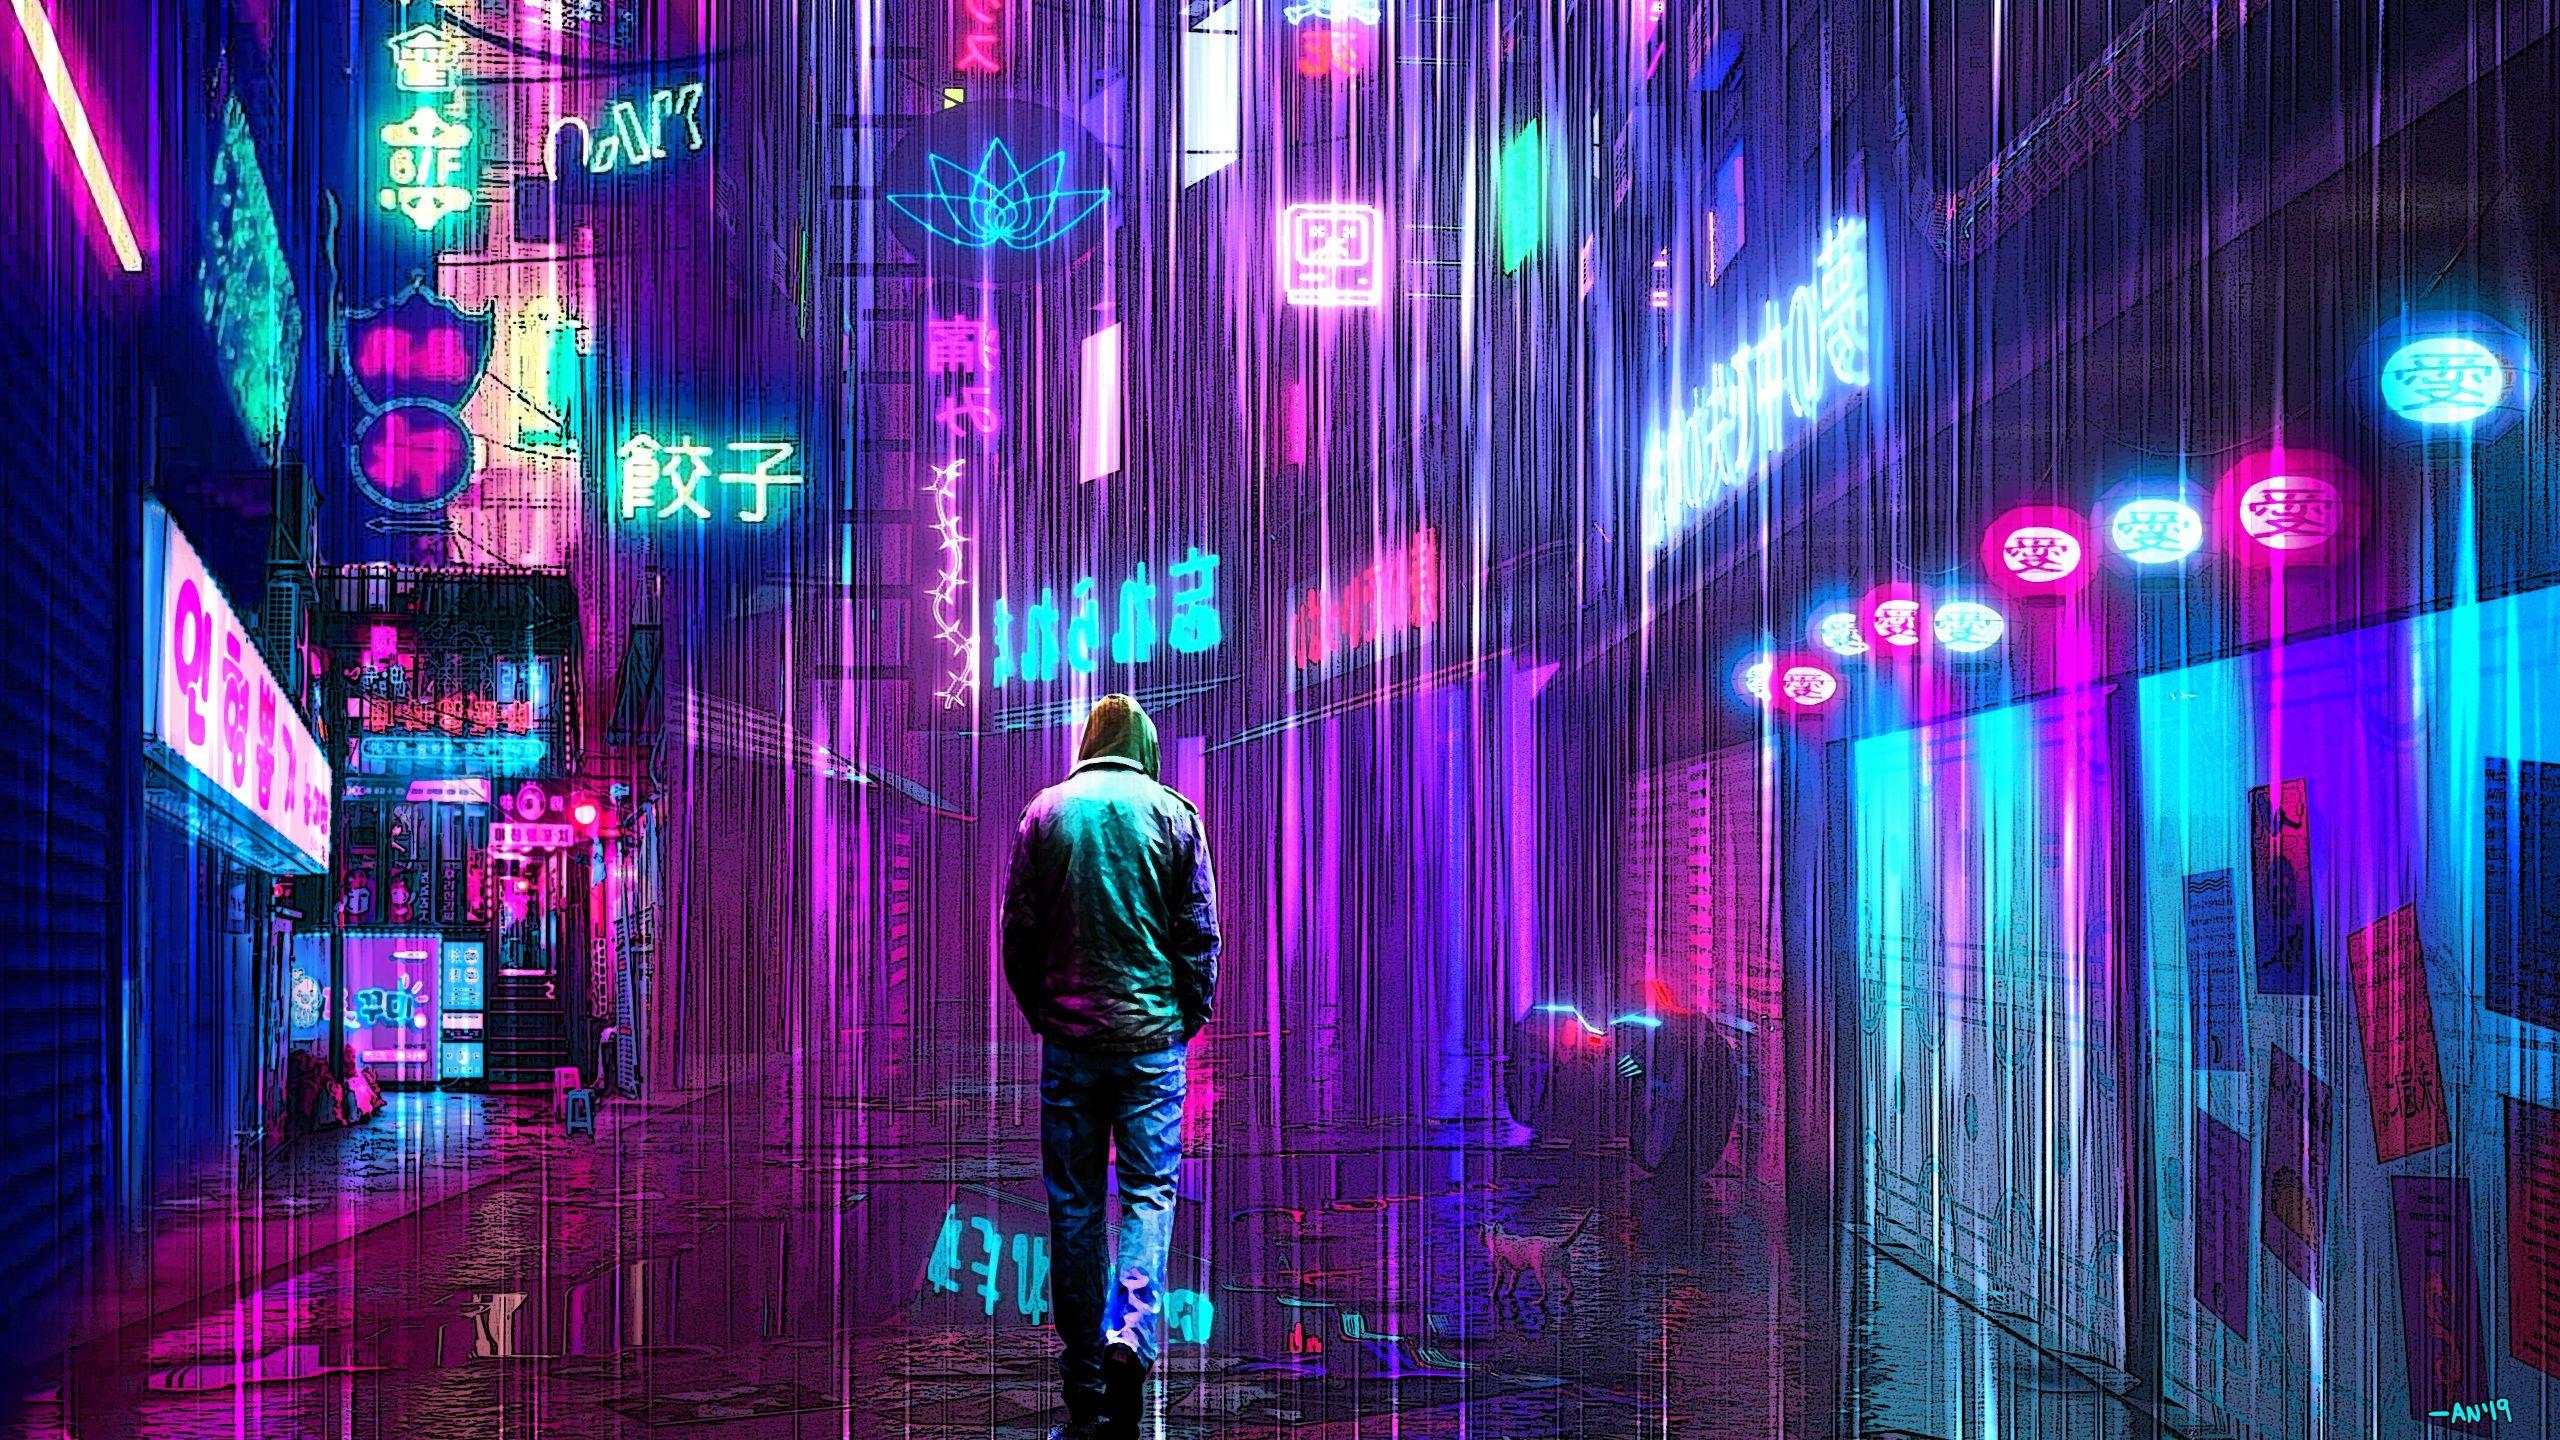 Neon City Cyberpunk Wallpapers - Top Free Neon City Cyberpunk